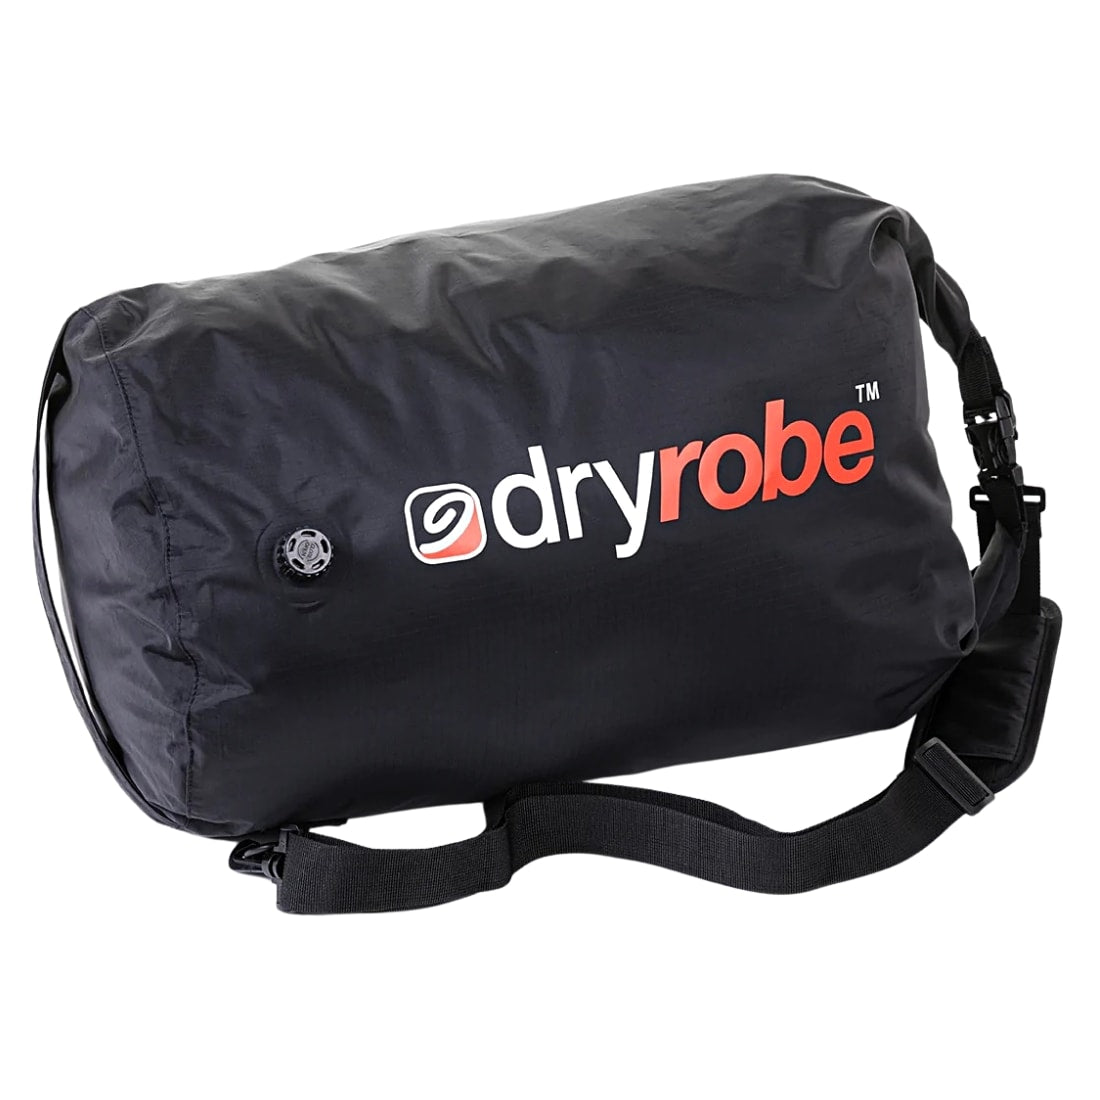 Dryrobe Compression Travel Bag - Black - Wet/Dry Bag by Dryrobe 33L